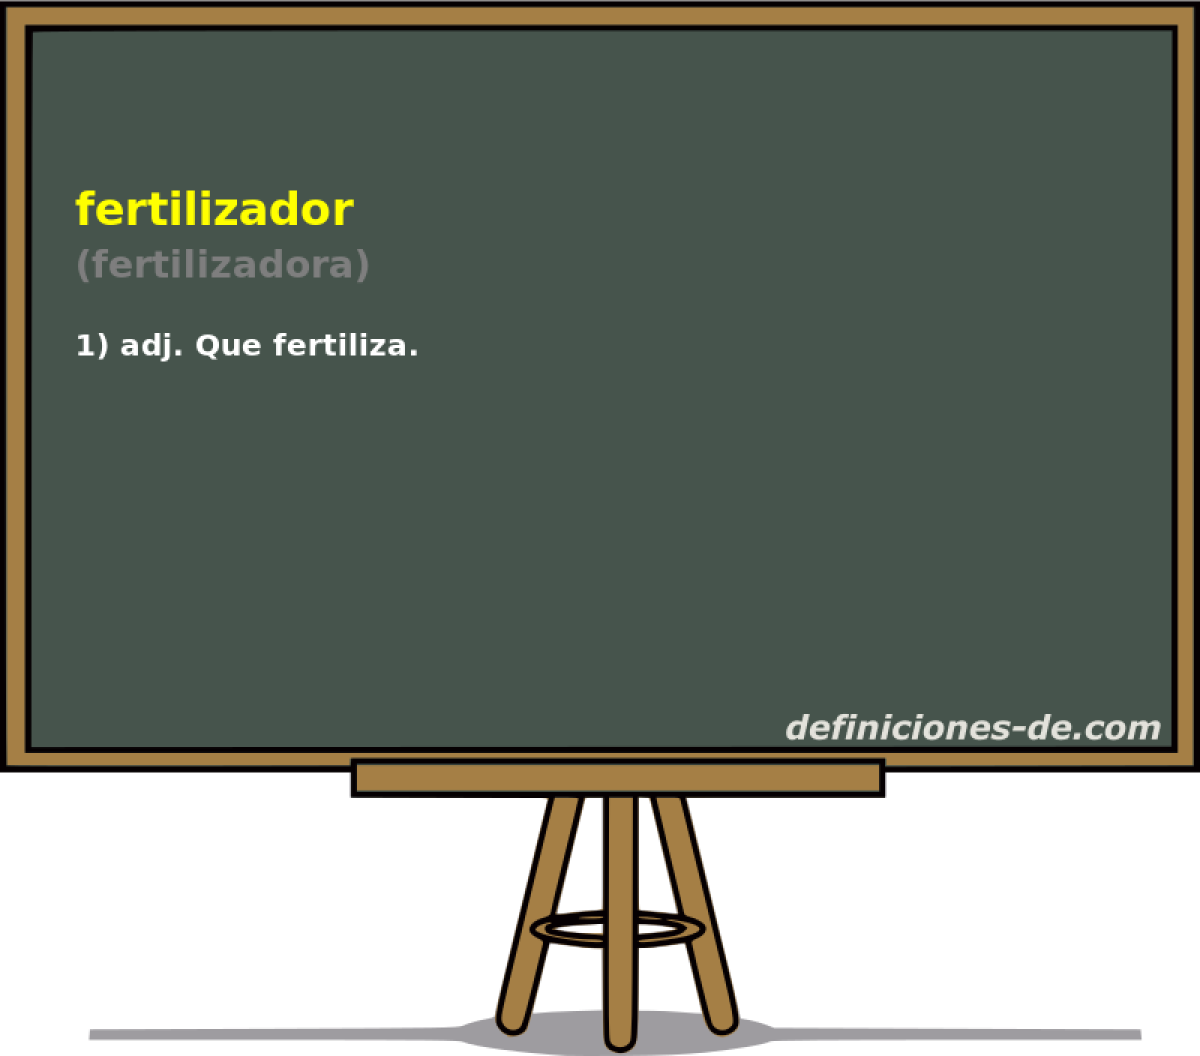 fertilizador (fertilizadora)